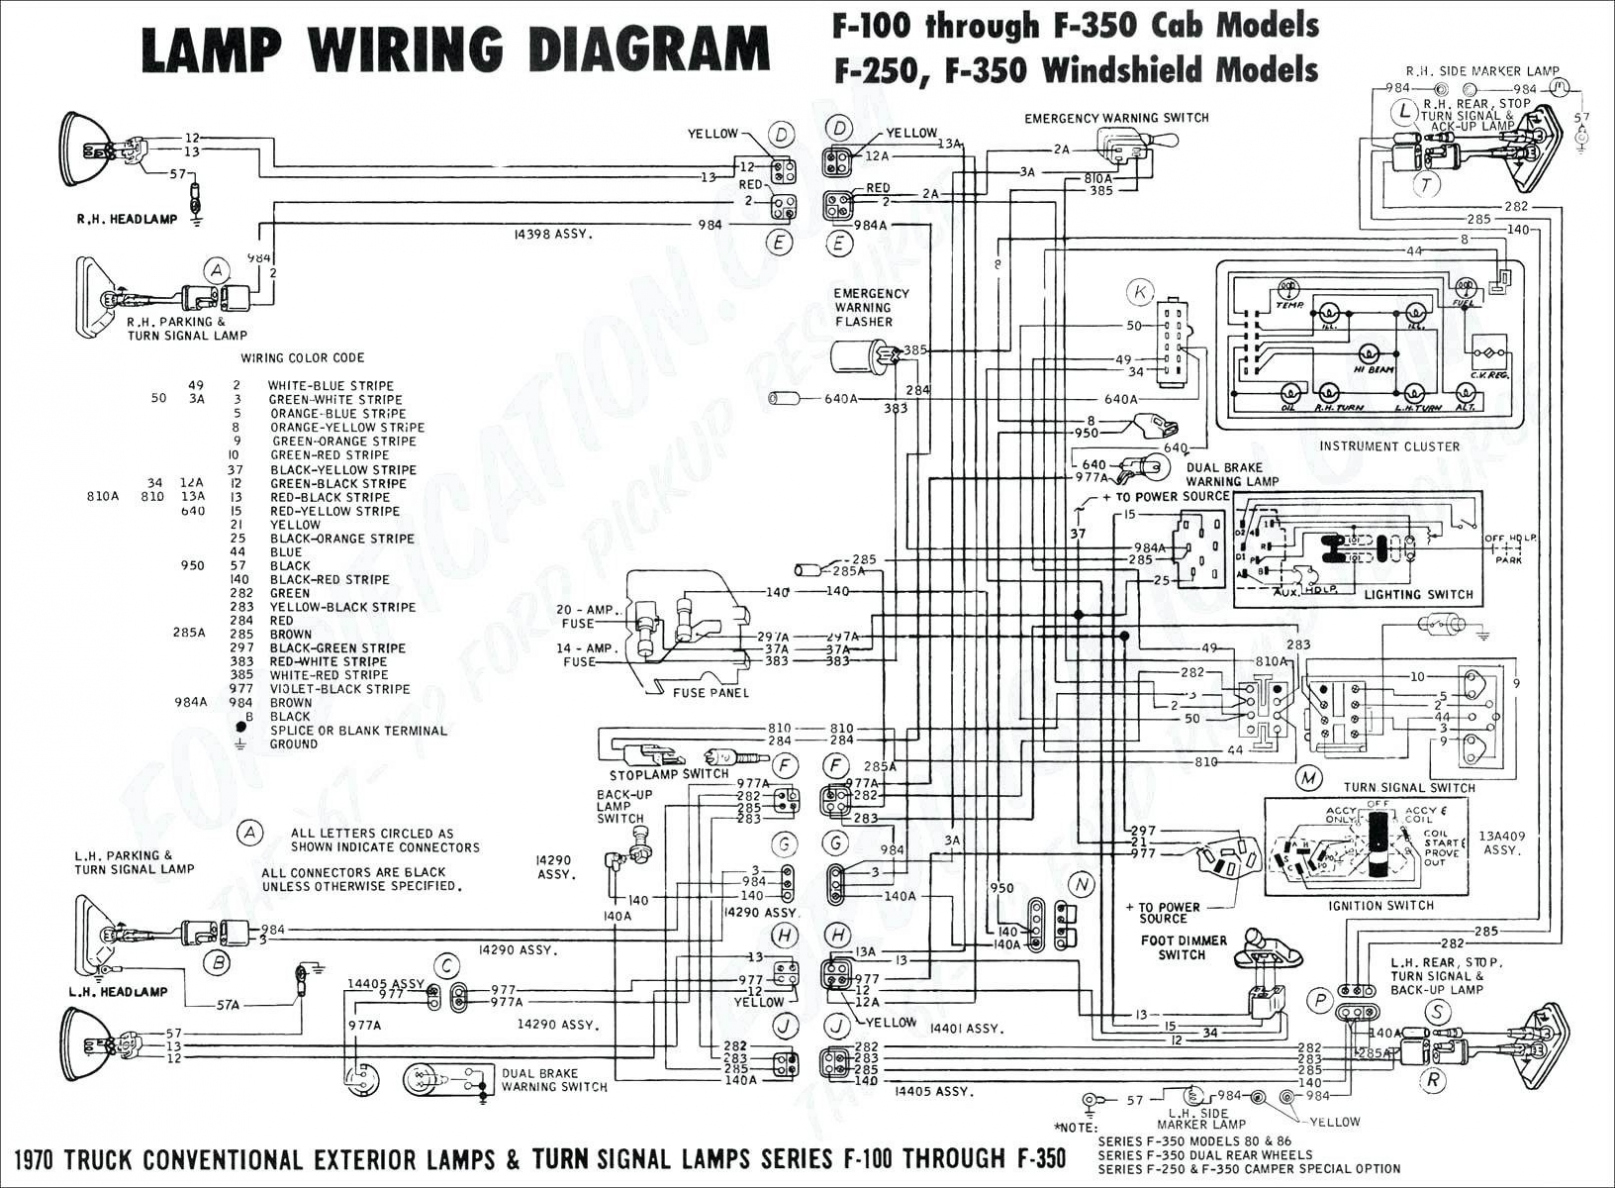 Wiring Diagram Western Unimount Save Western Unimount Wiring Diagram - Western Unimount Plow Wiring Diagram